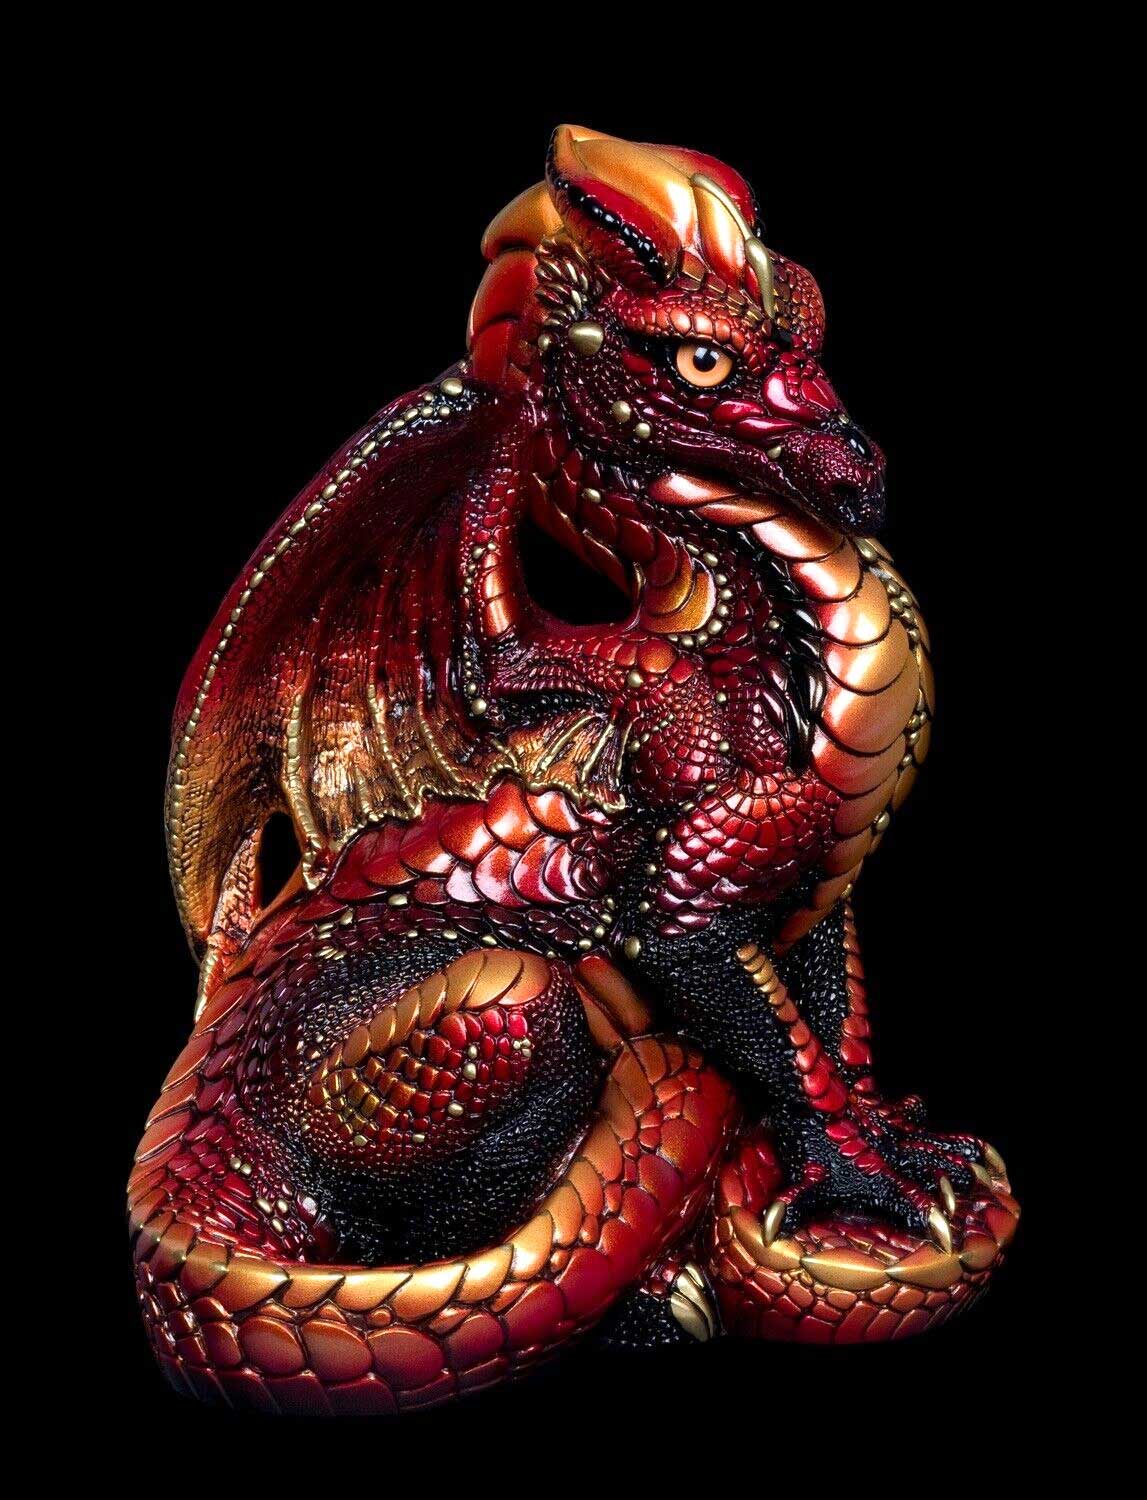 20230306-Brimstone-Male-Dragon-Test-Paint-1-by-Gina